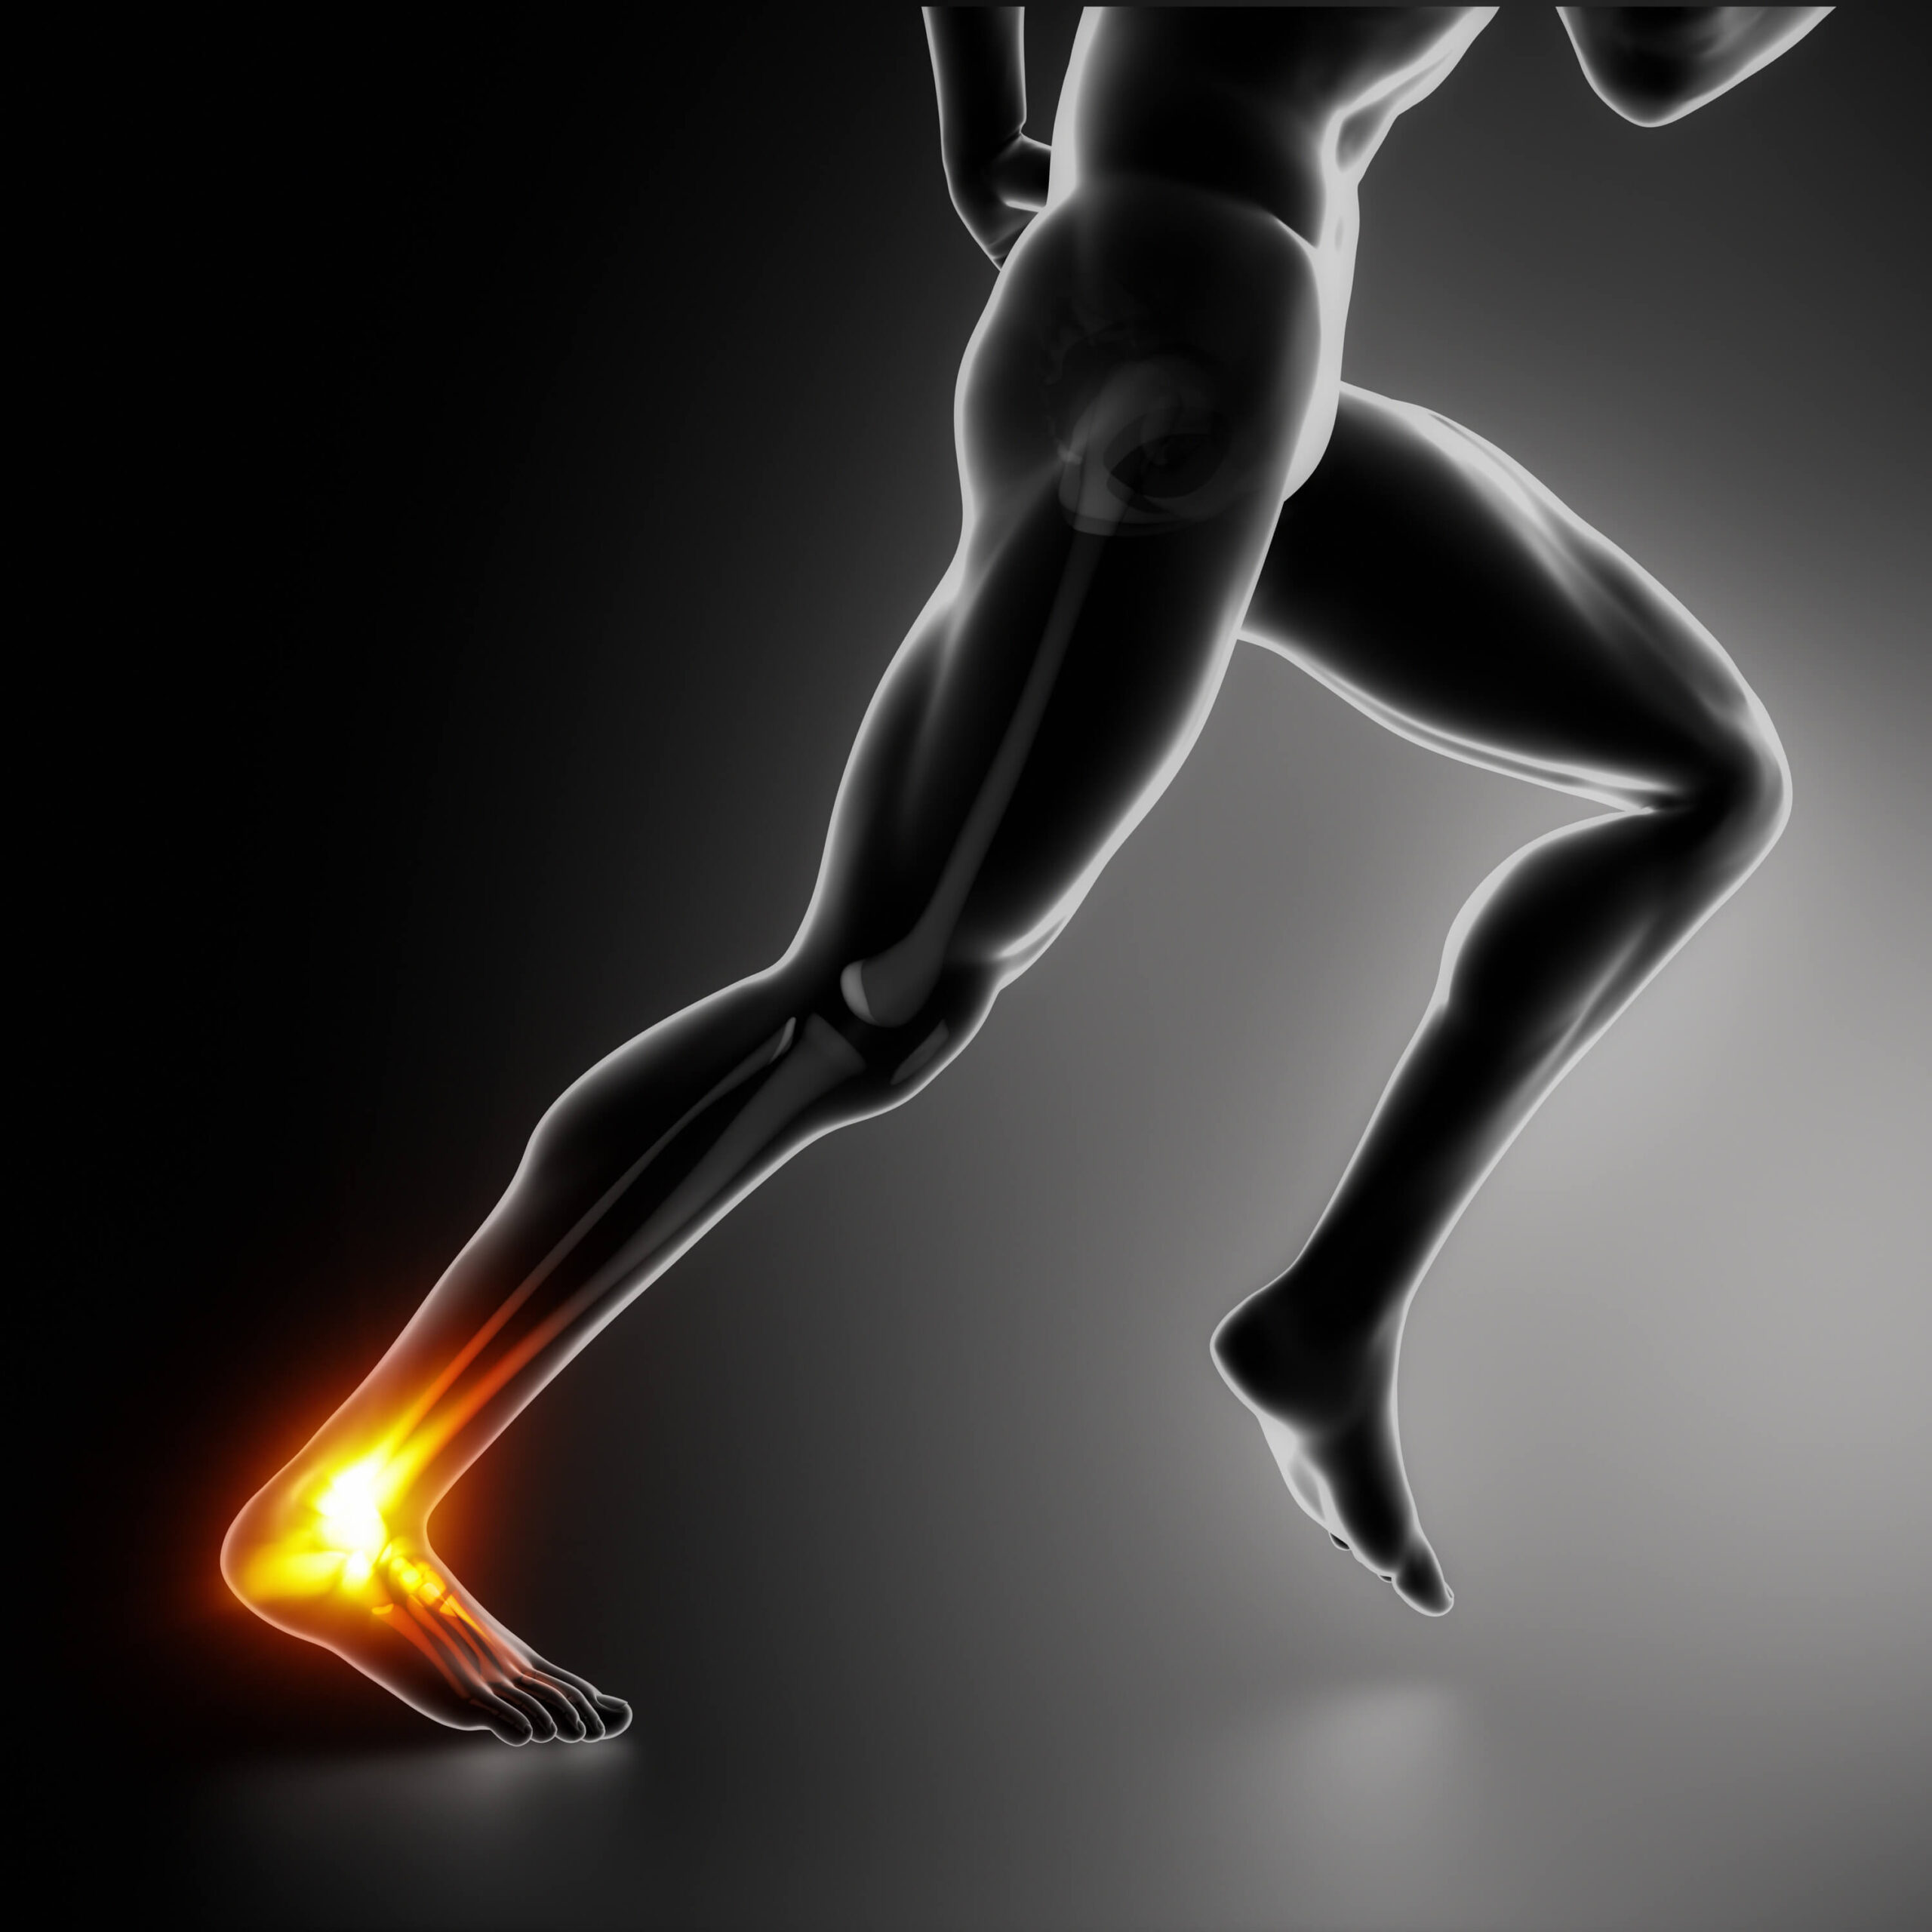 Foot Pain Symptoms | Spine-health